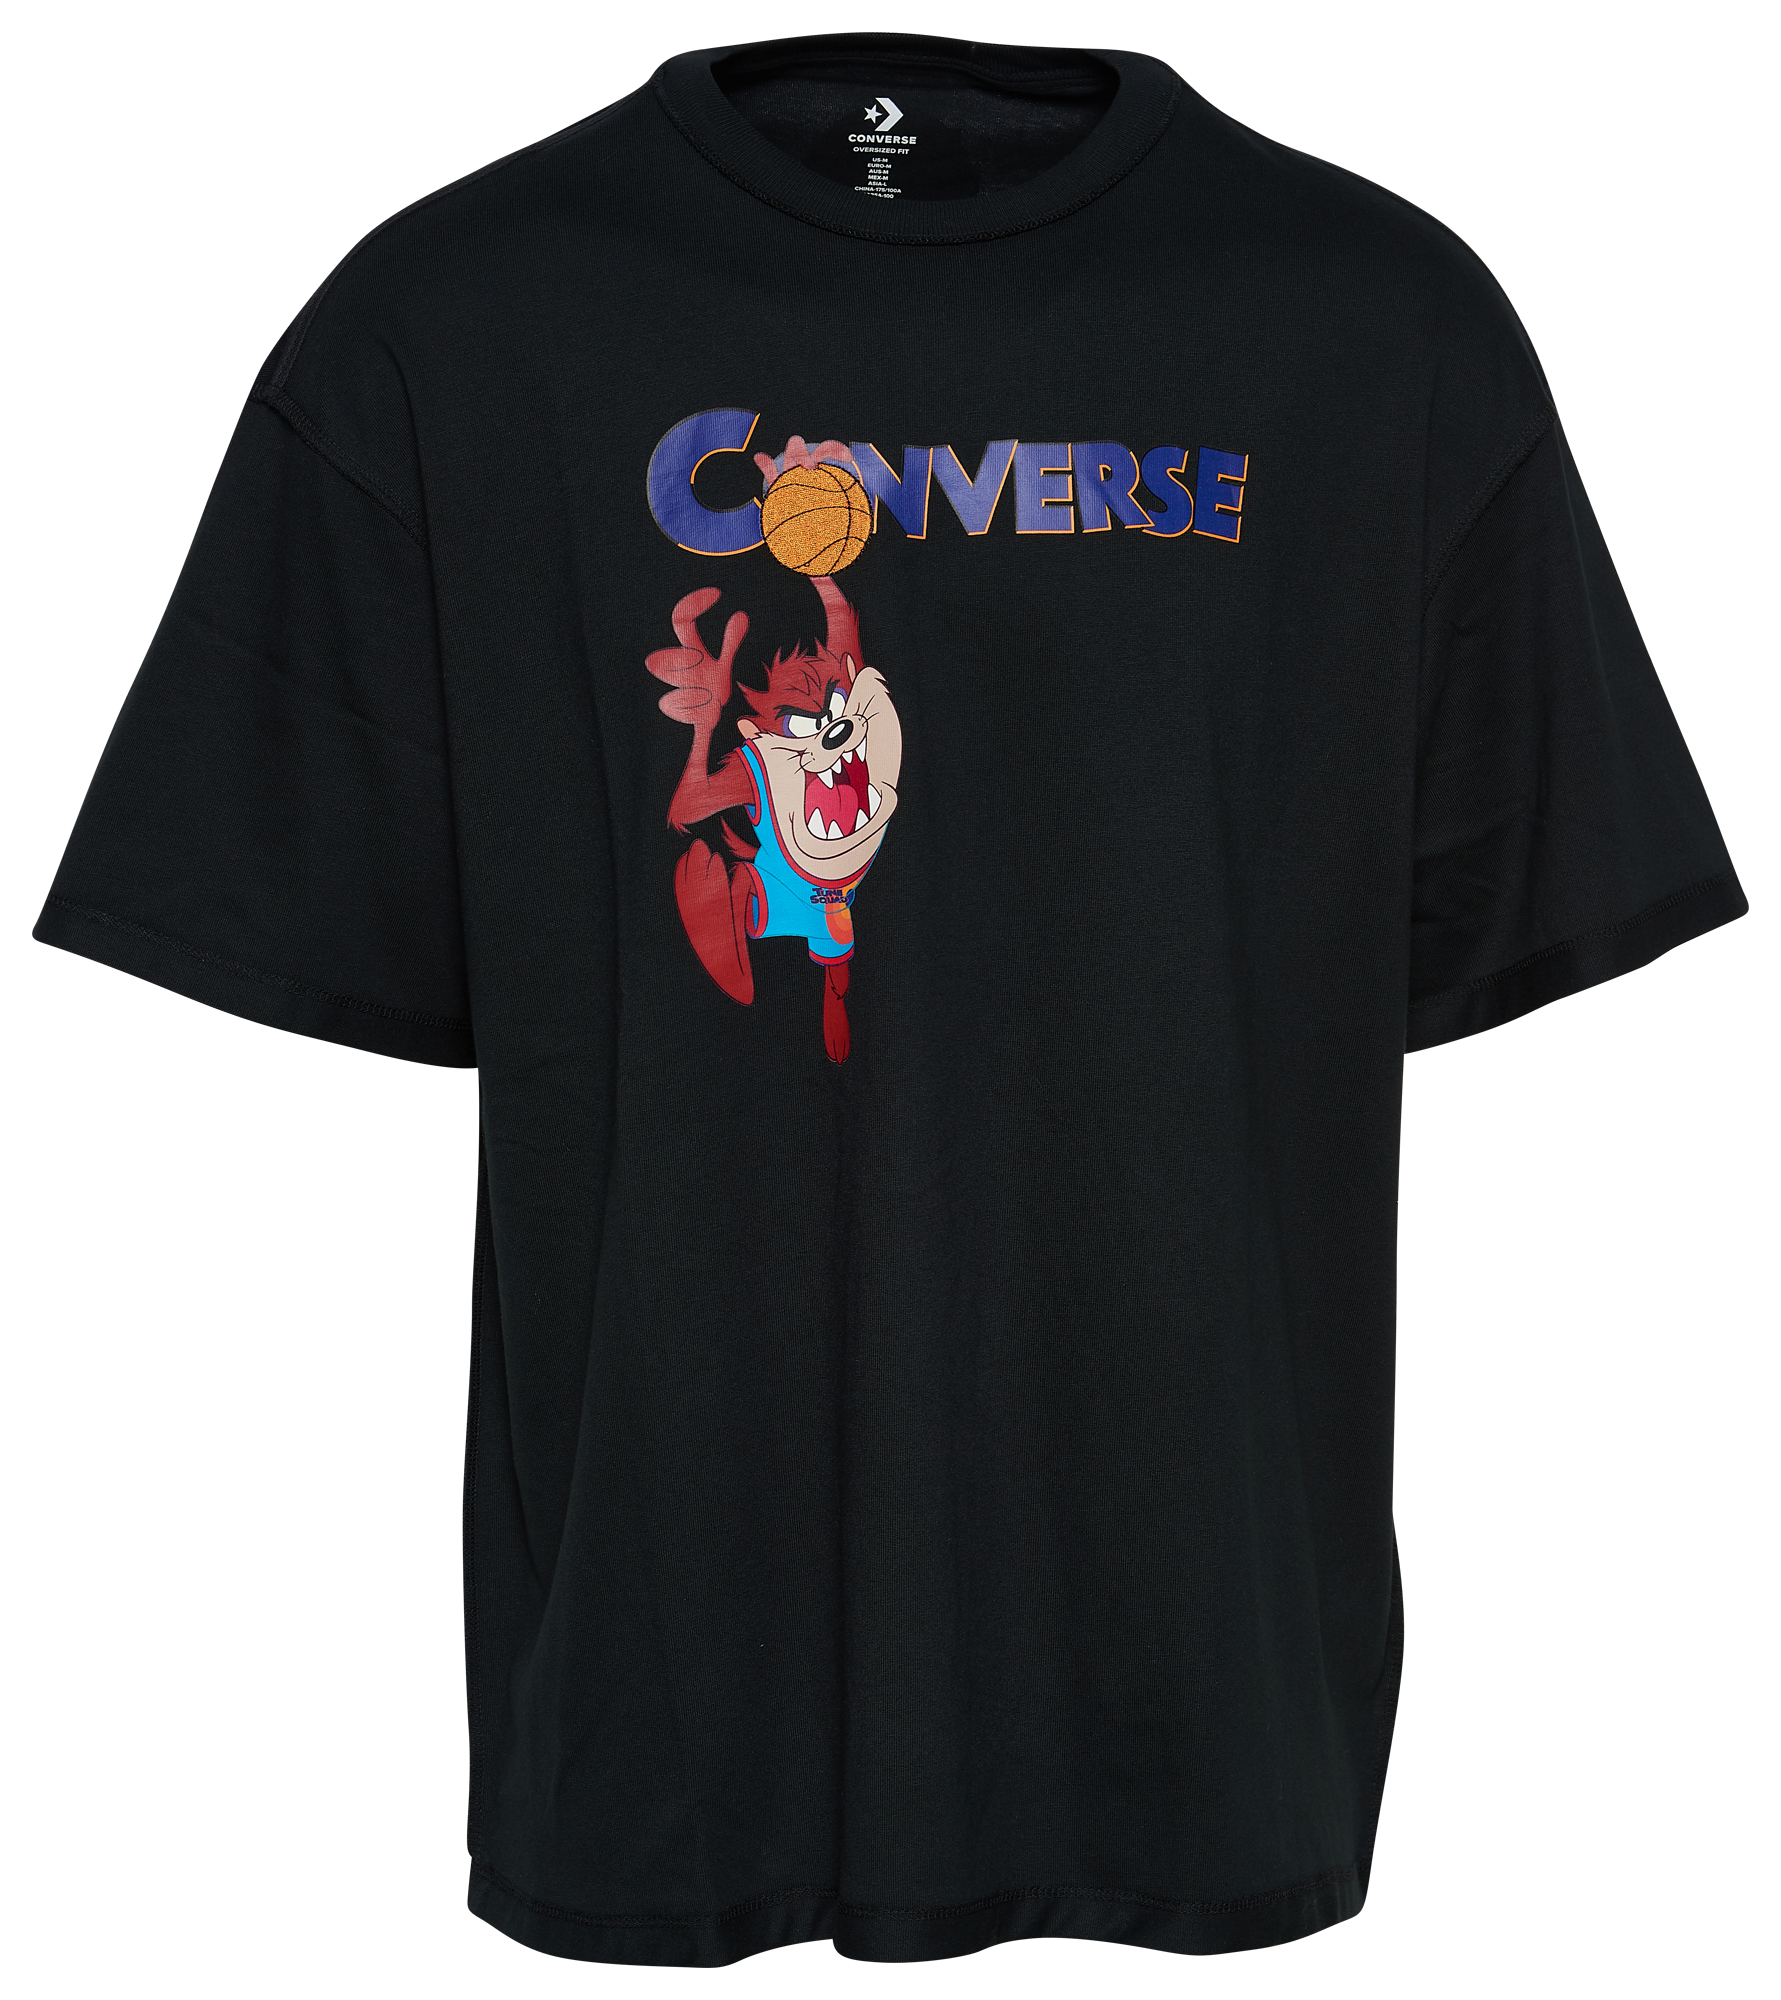 Converse Space Jam T-Shirt - Men's